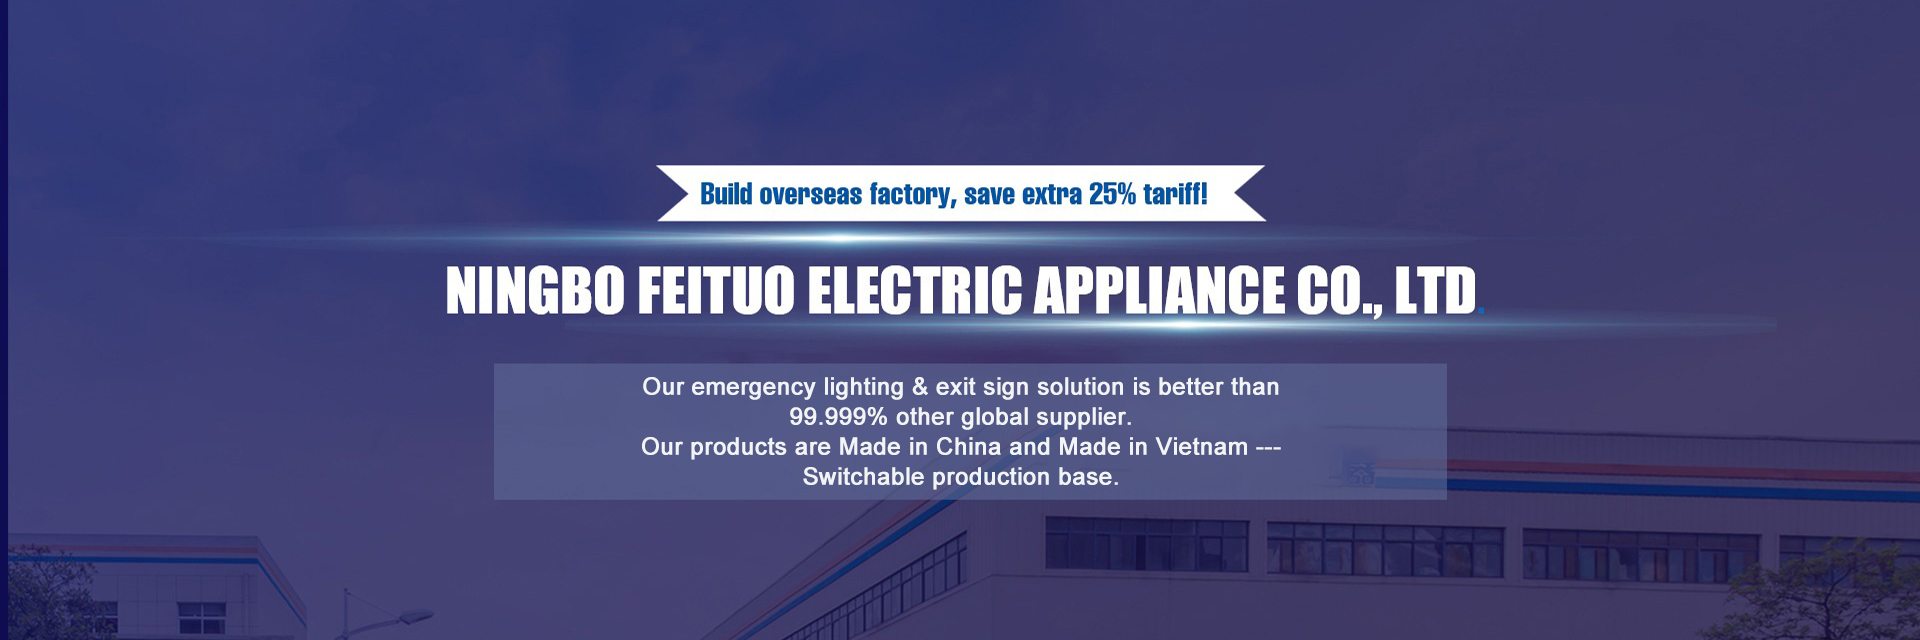 Ningbo Feituo Electric Appliance Co., LTD.